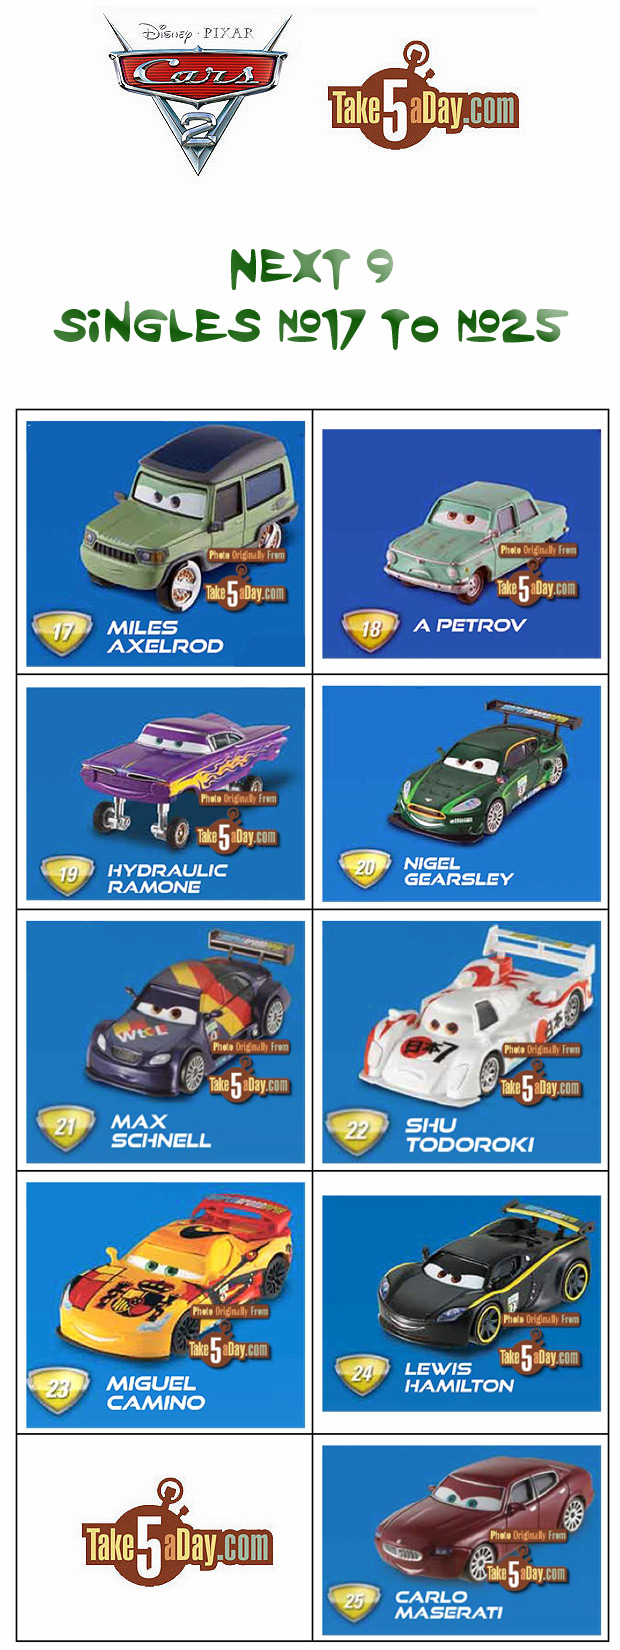 Disney Pixar Cars 2 Hot Rod Lightning McQueen RideMakerz Green Exclusive New